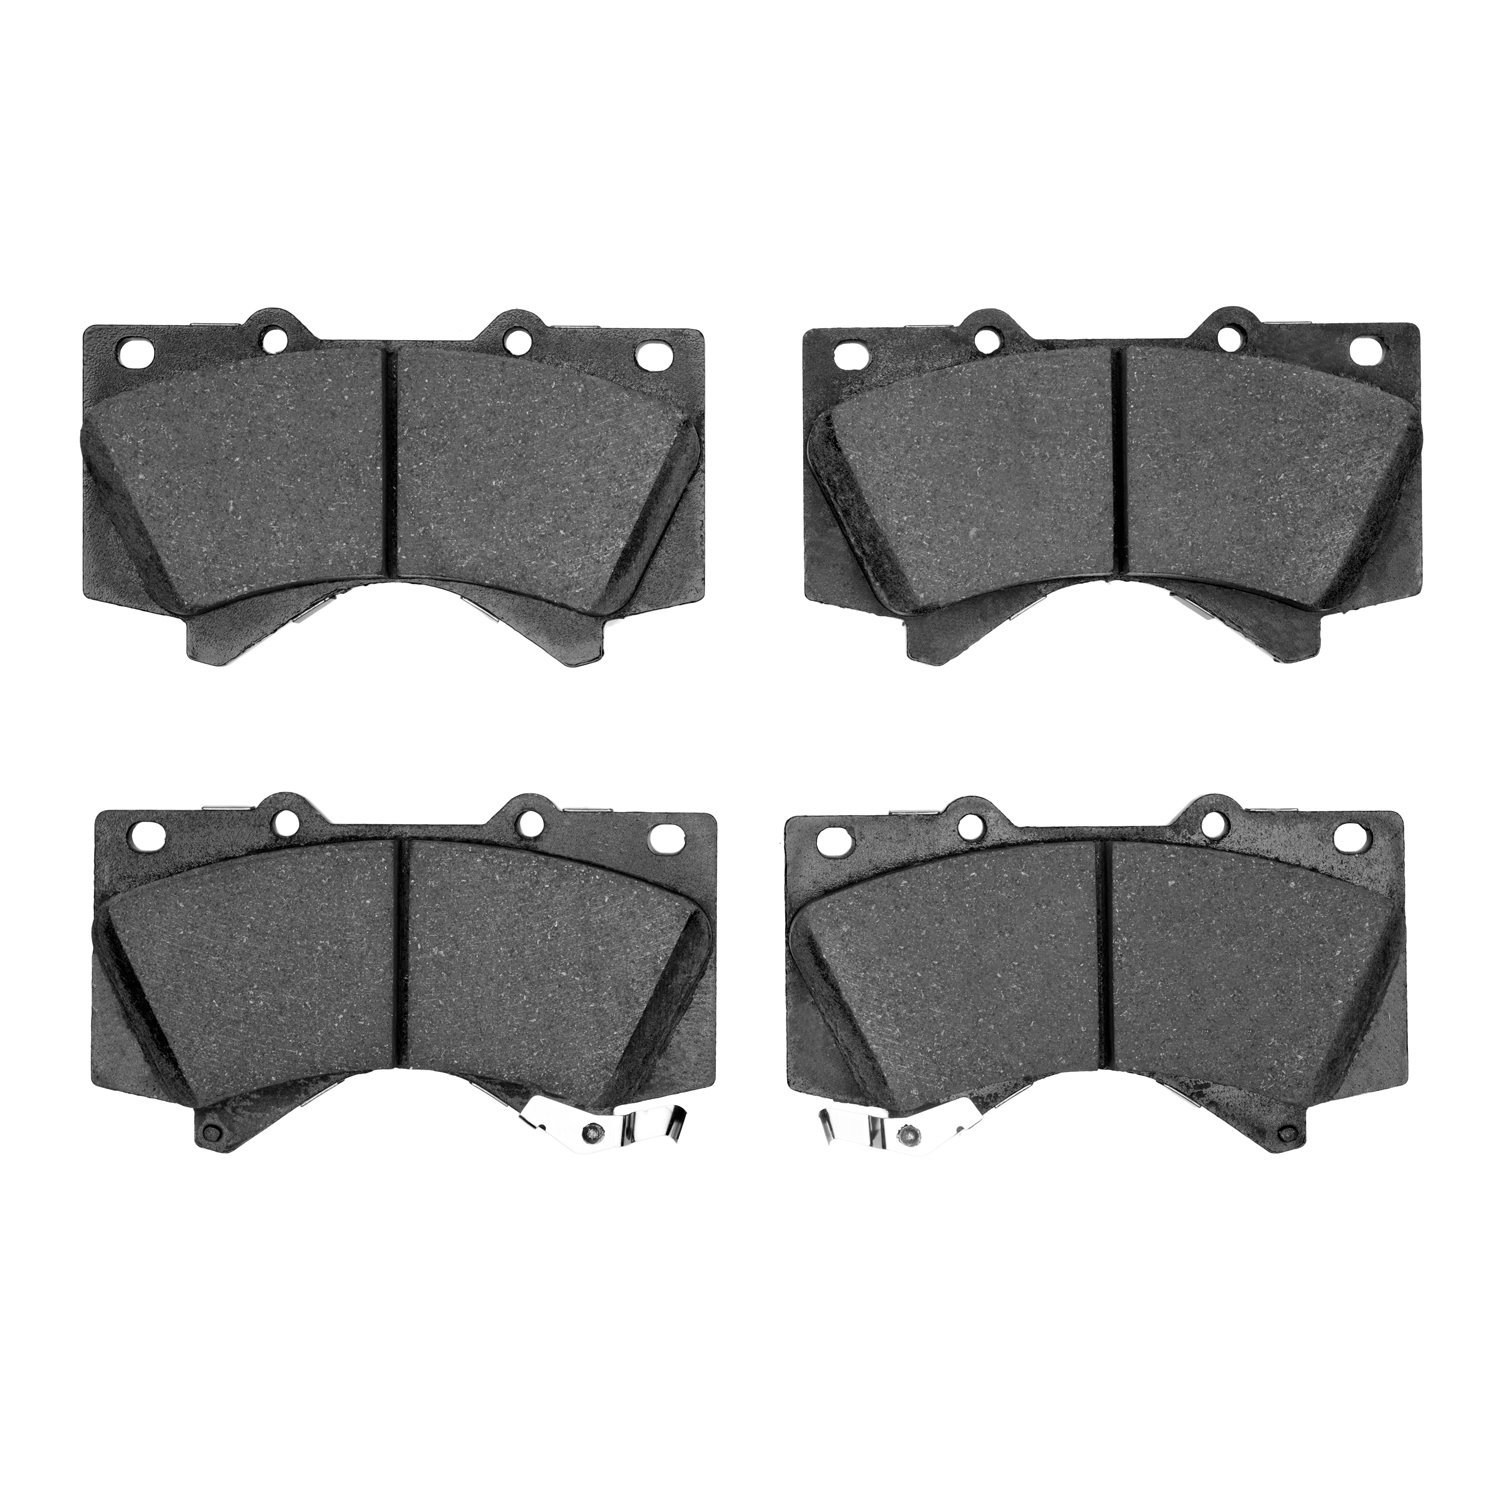 Ceramic Brake Pads, Fits Select Lexus/Toyota/Scion, Position: Front